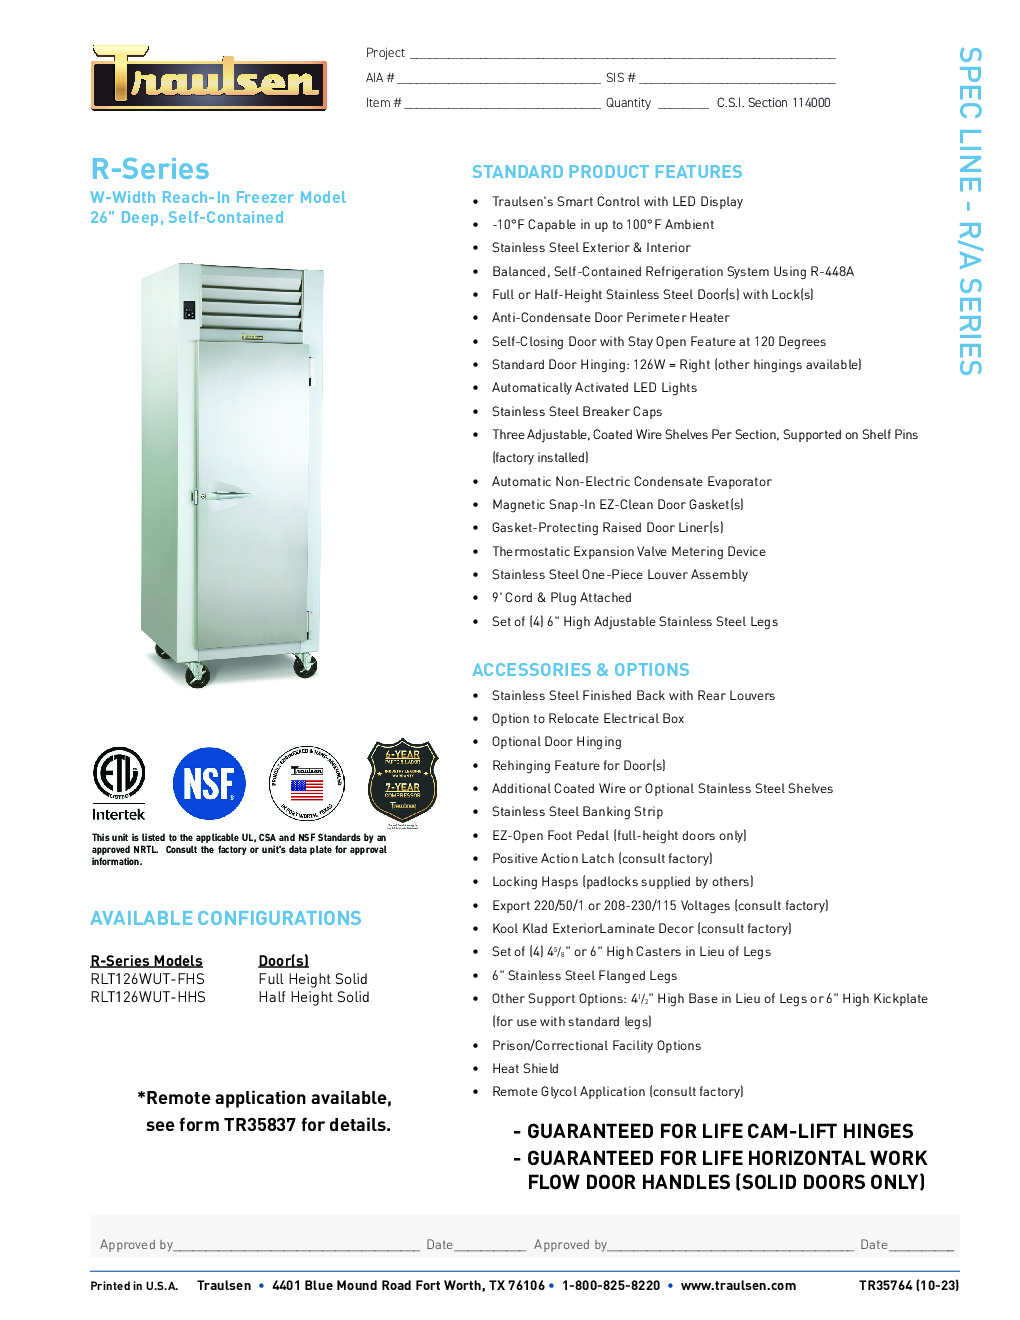 Traulsen RLT126WUT-FHS Reach-In Freezer